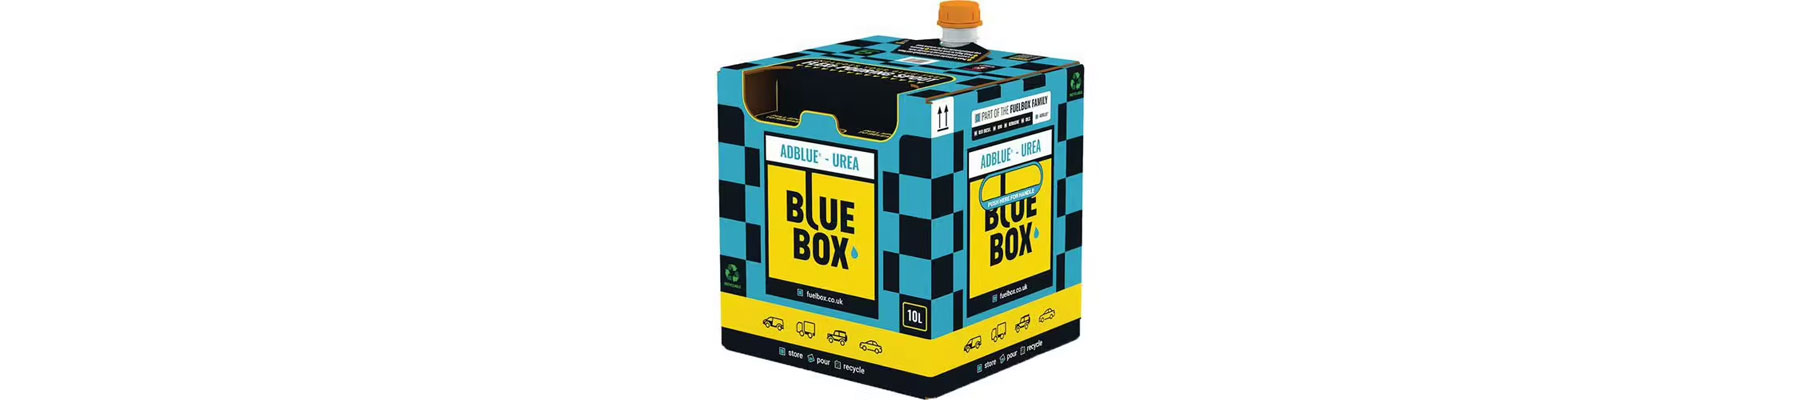 FuelBox AdBlue in a Box 10L